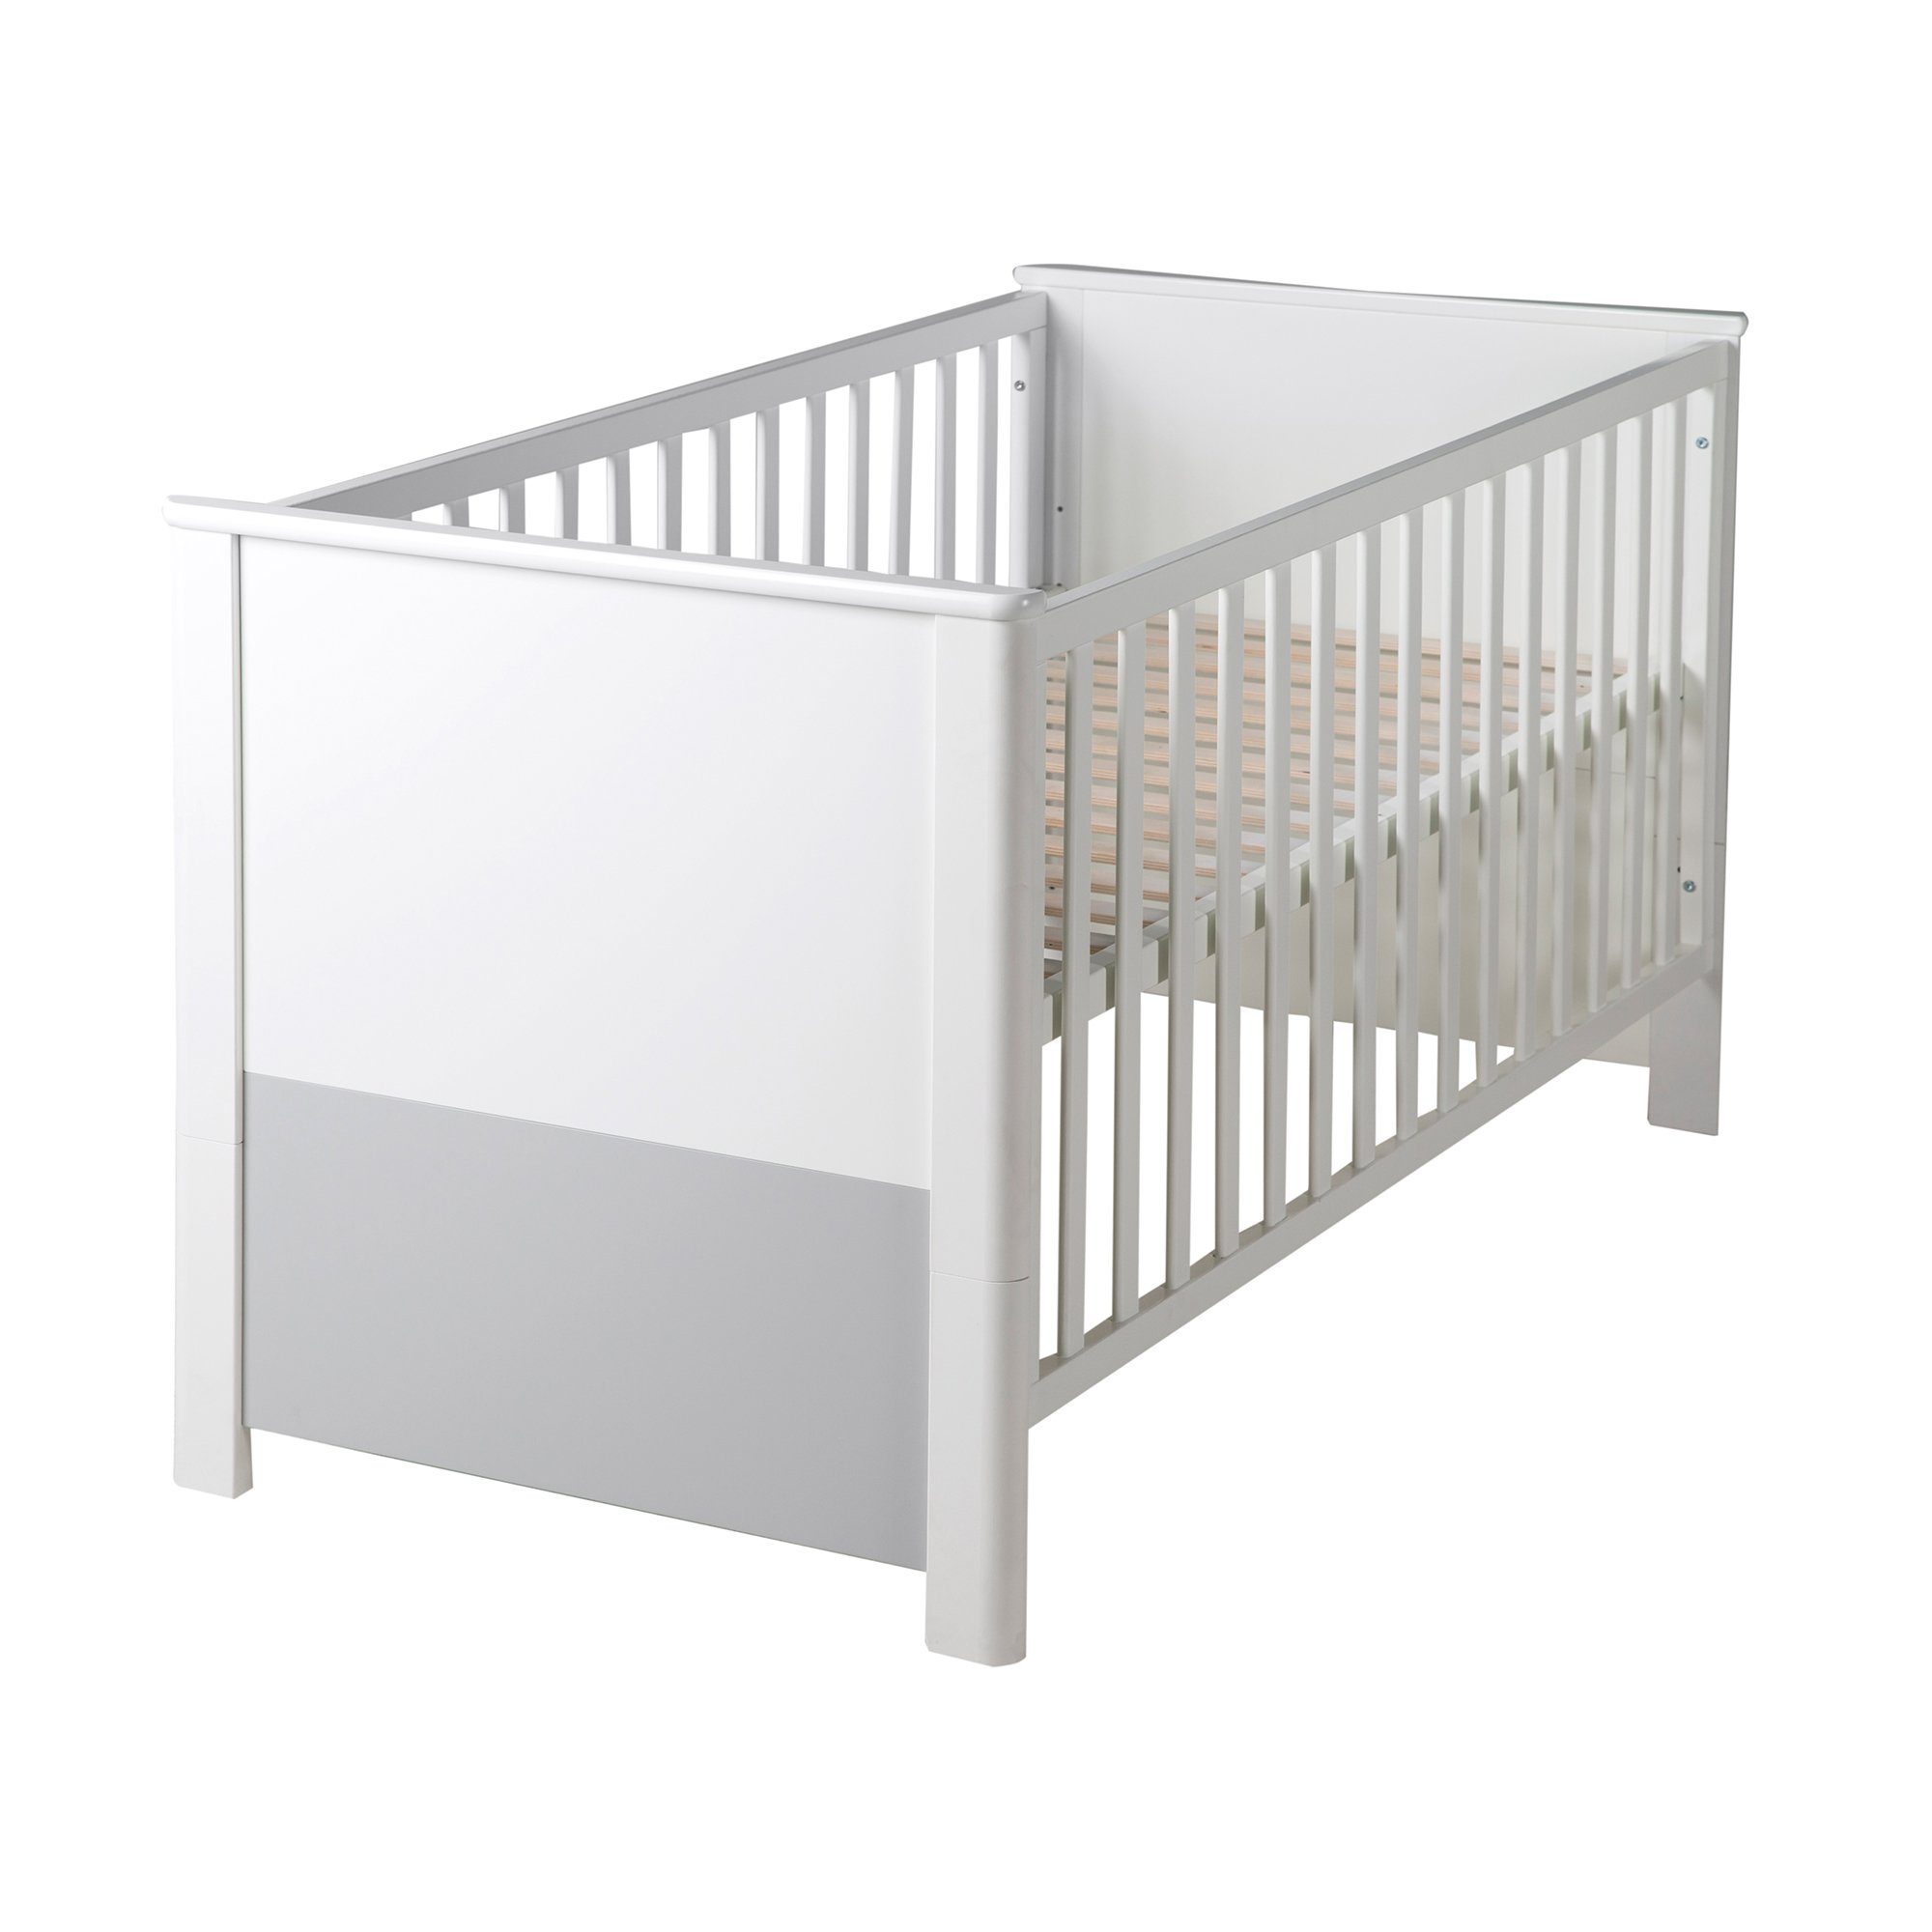 roba® Kinderbett Gitterbett Linus, 70 x 140 cm, in weiß/grau, Kombi- Kinderbett, höhenverstellbar, umbaubar zum Juniorbett